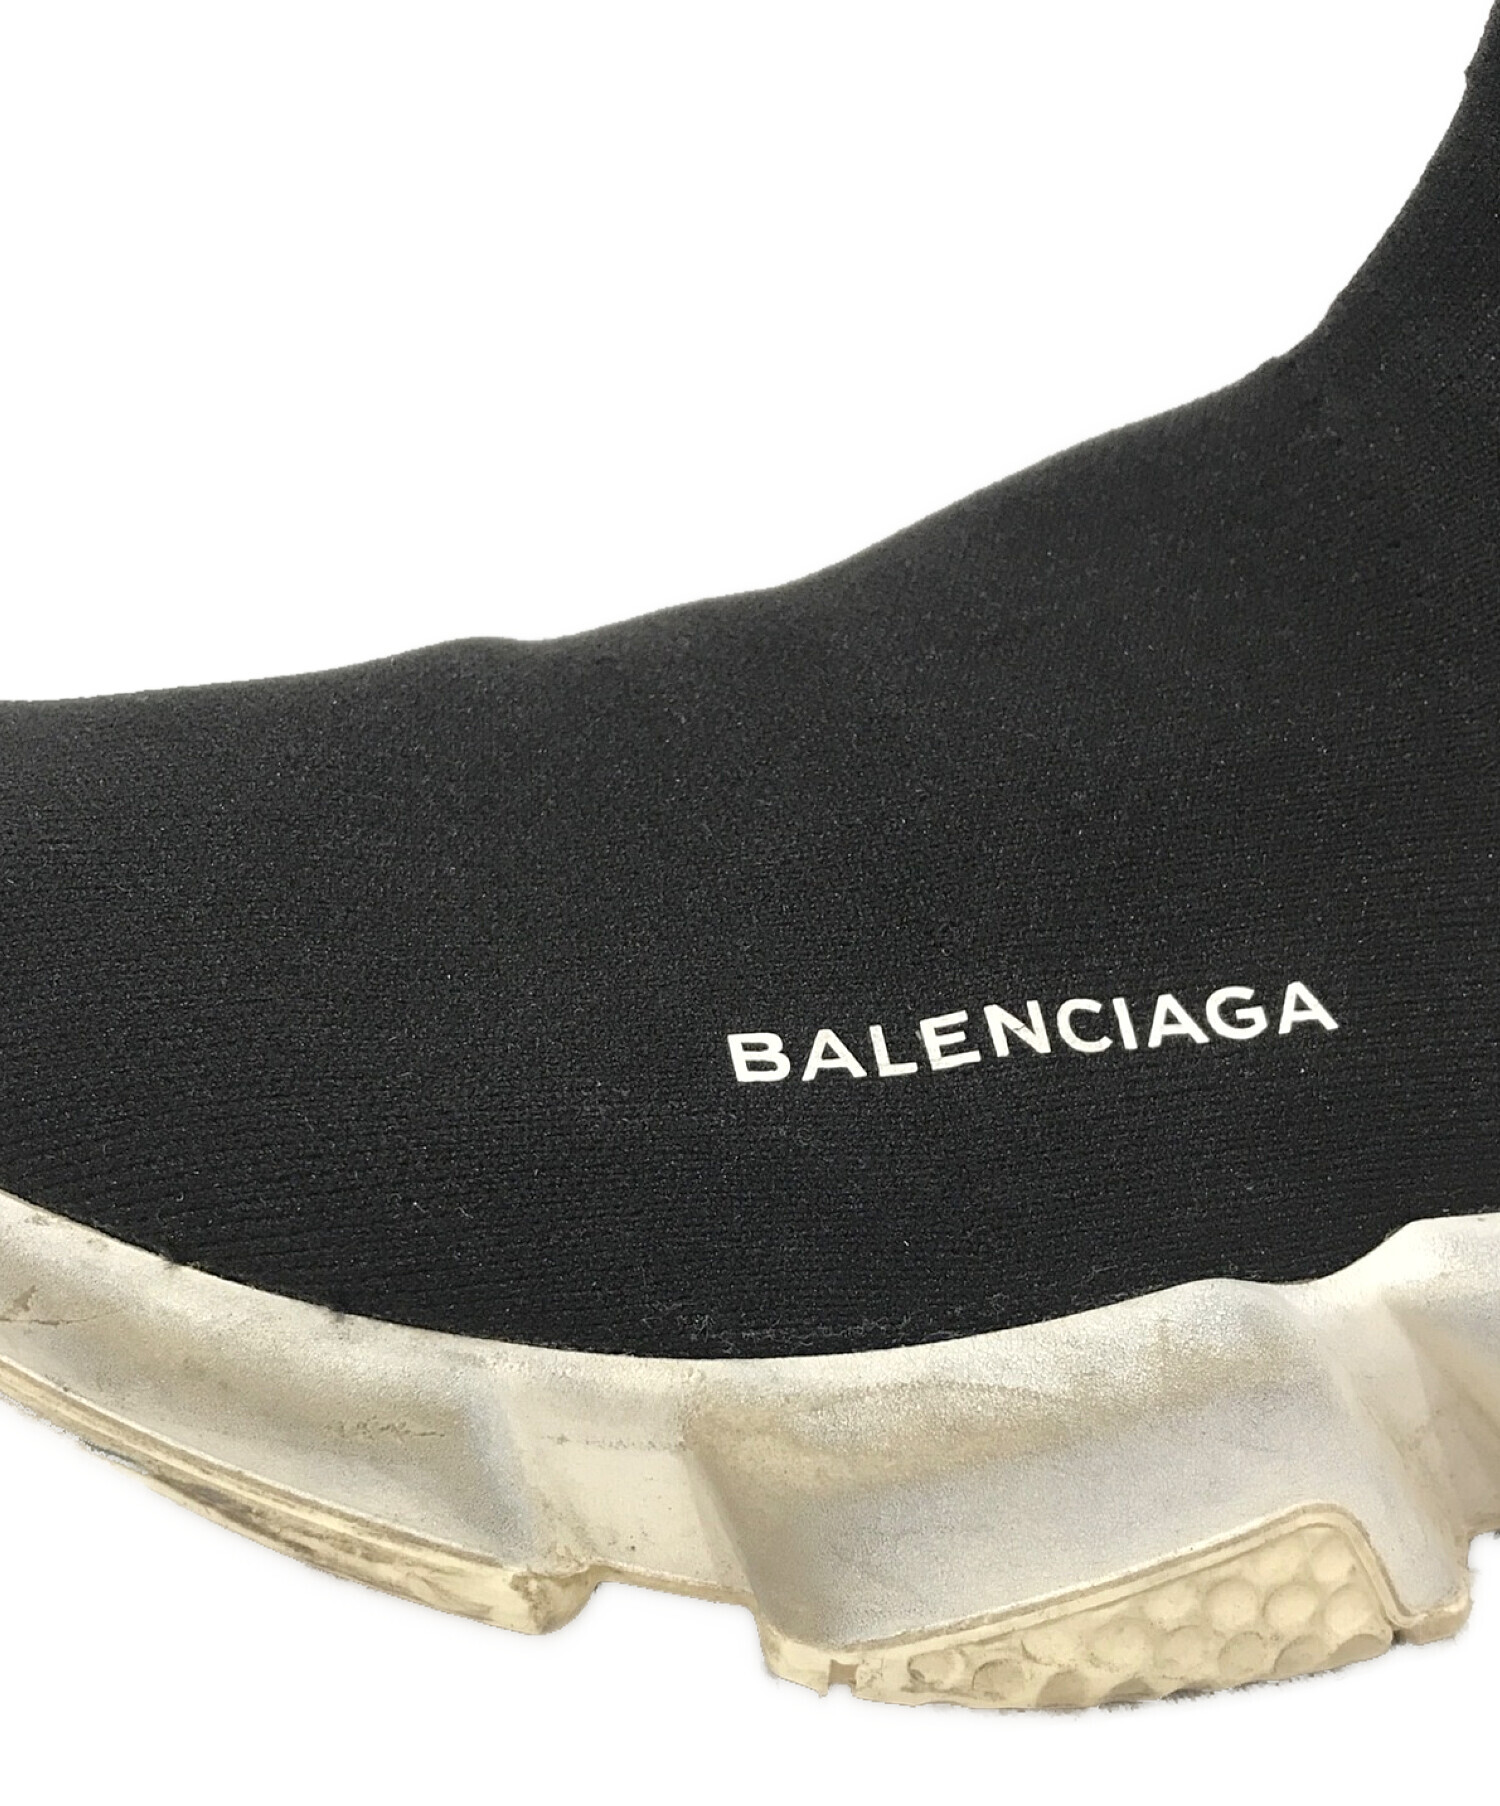 BALENCIAGA (バレンシアガ) スピードトレーナー ブラック サイズ:43